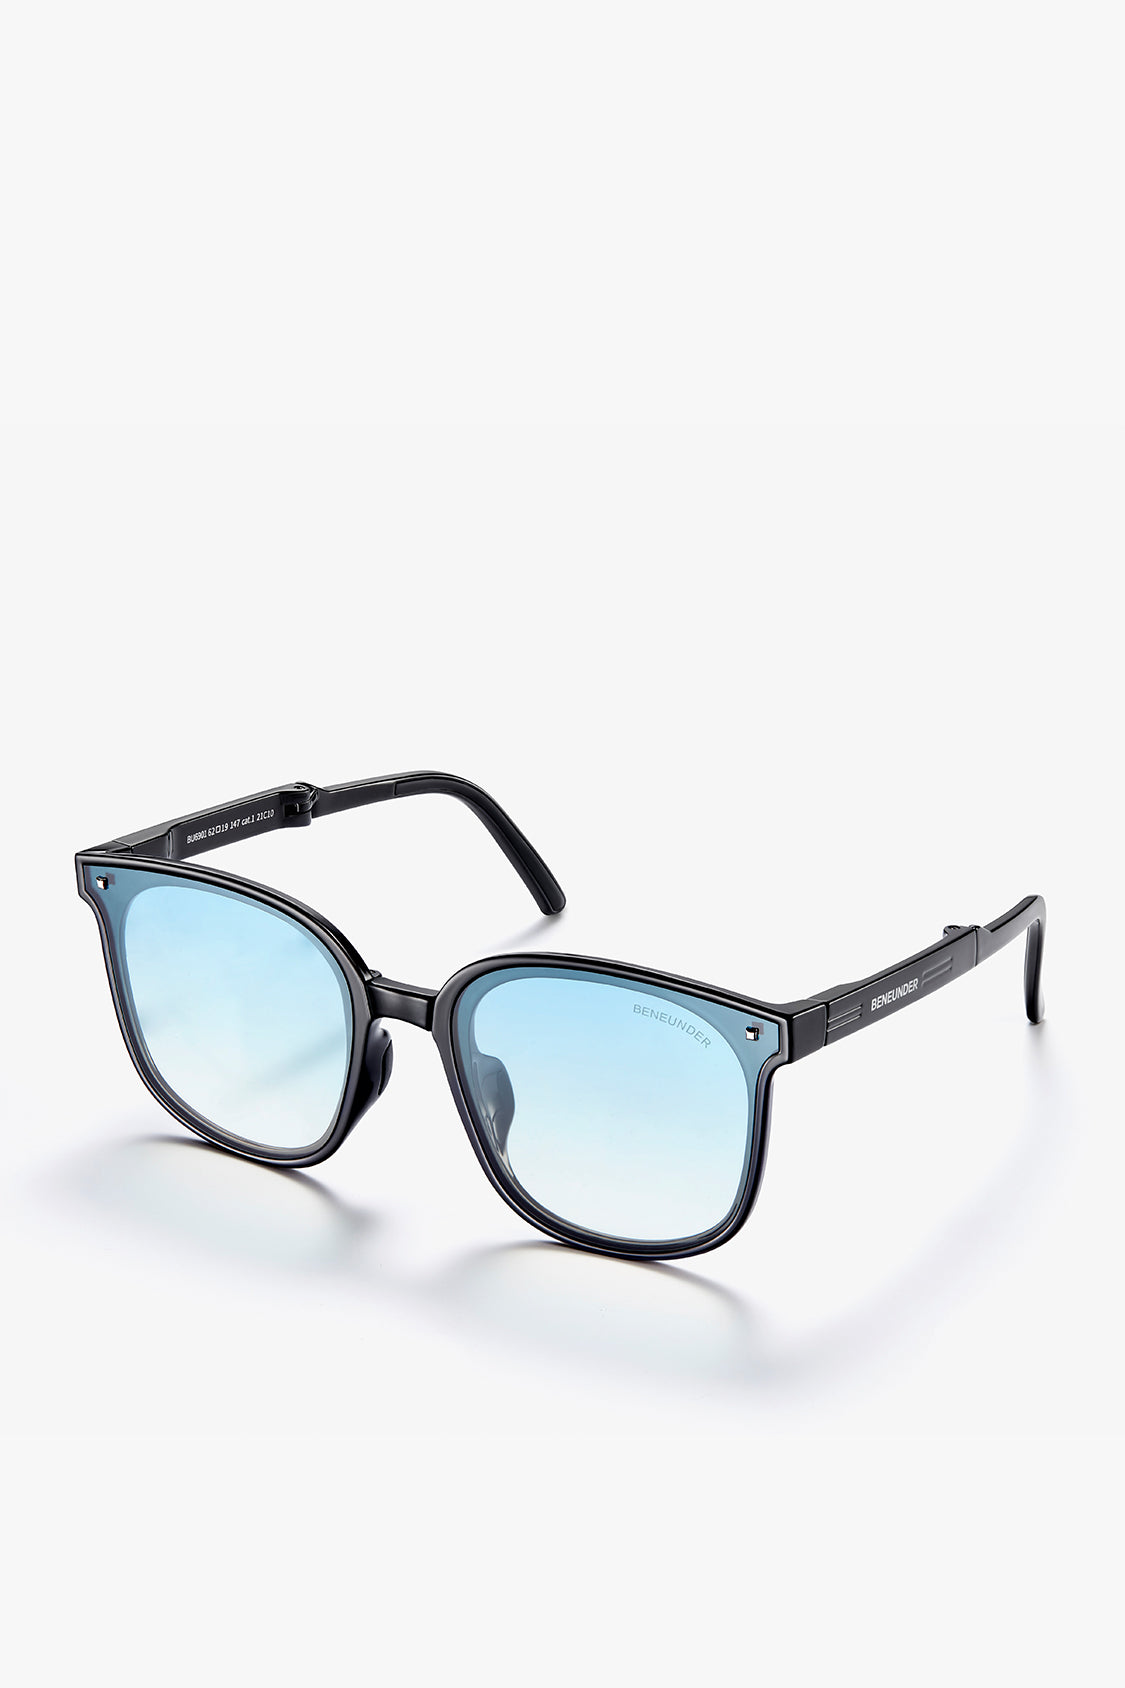 beneunder wild polarized folding sunglasses shades for women men #color_blue